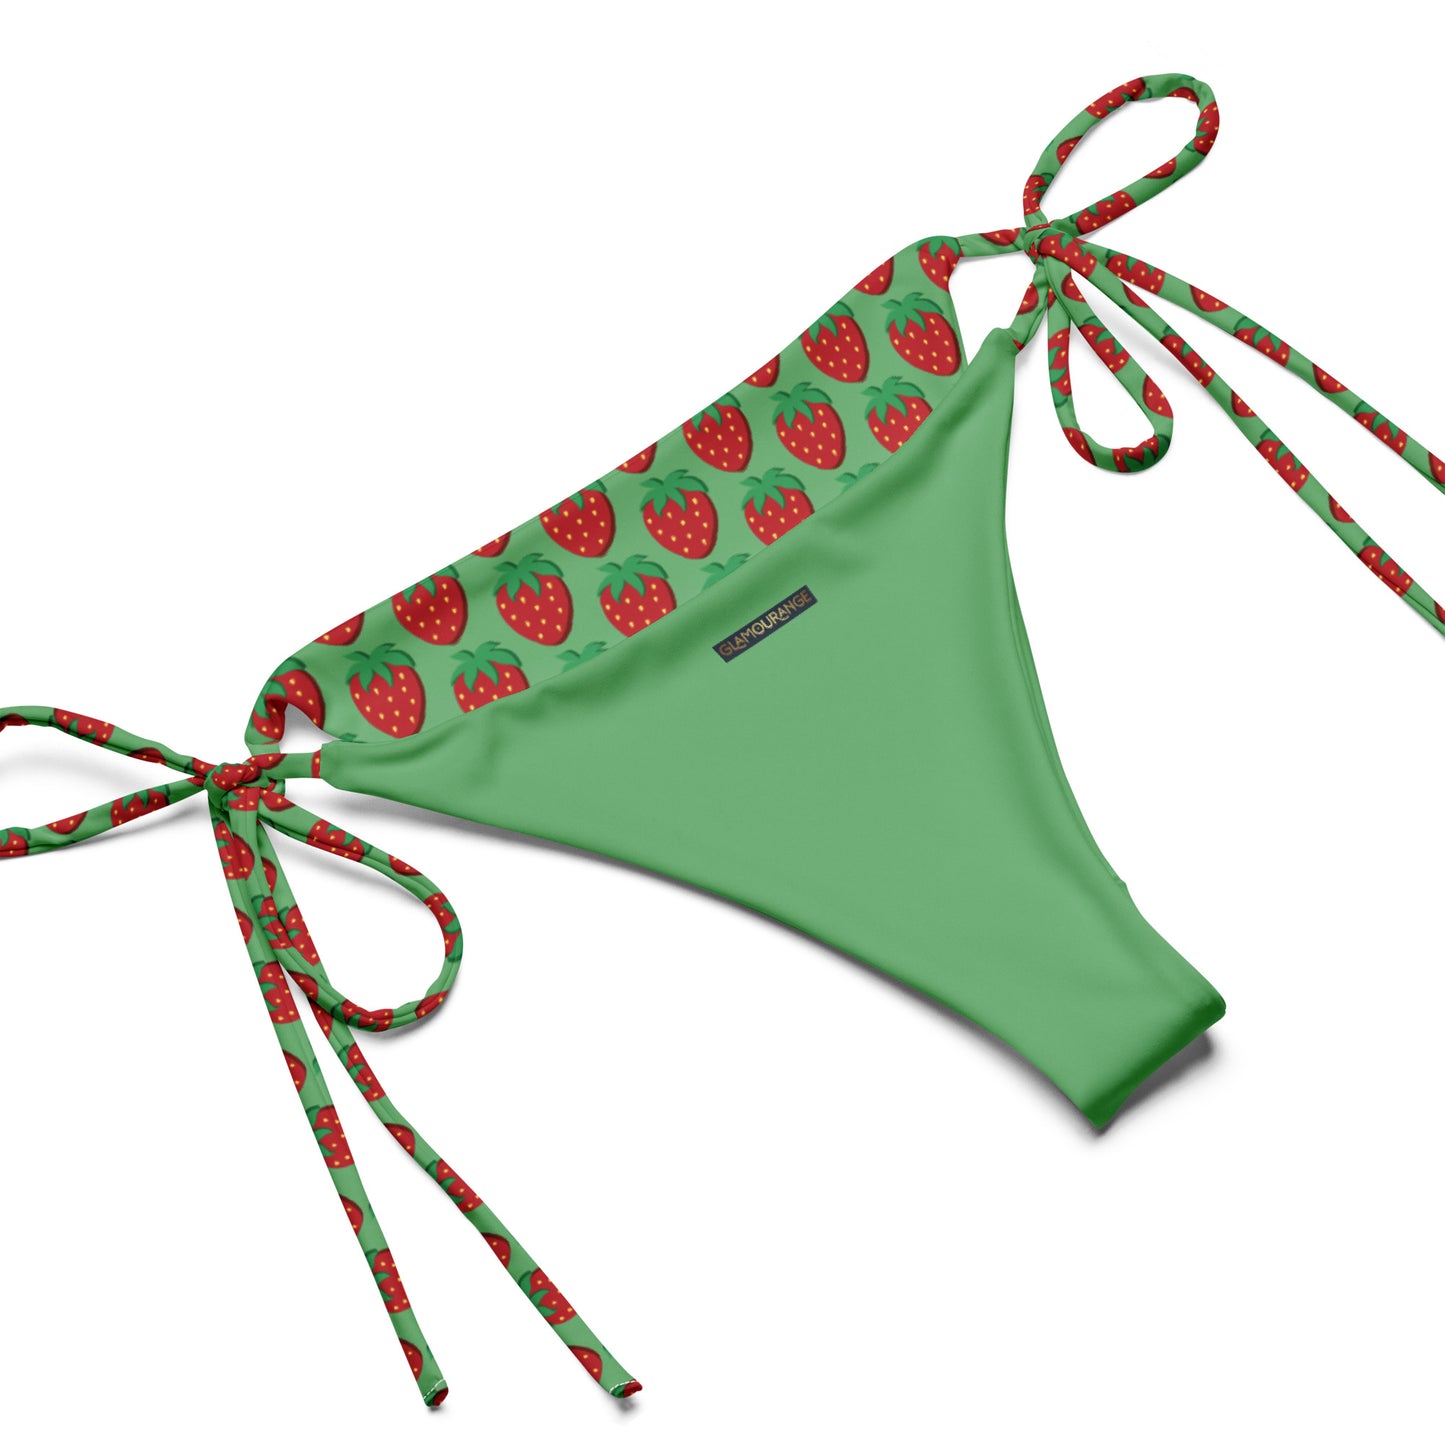 String Bikini (Glamourange Women Swimwear By Patterns - 004 Model)